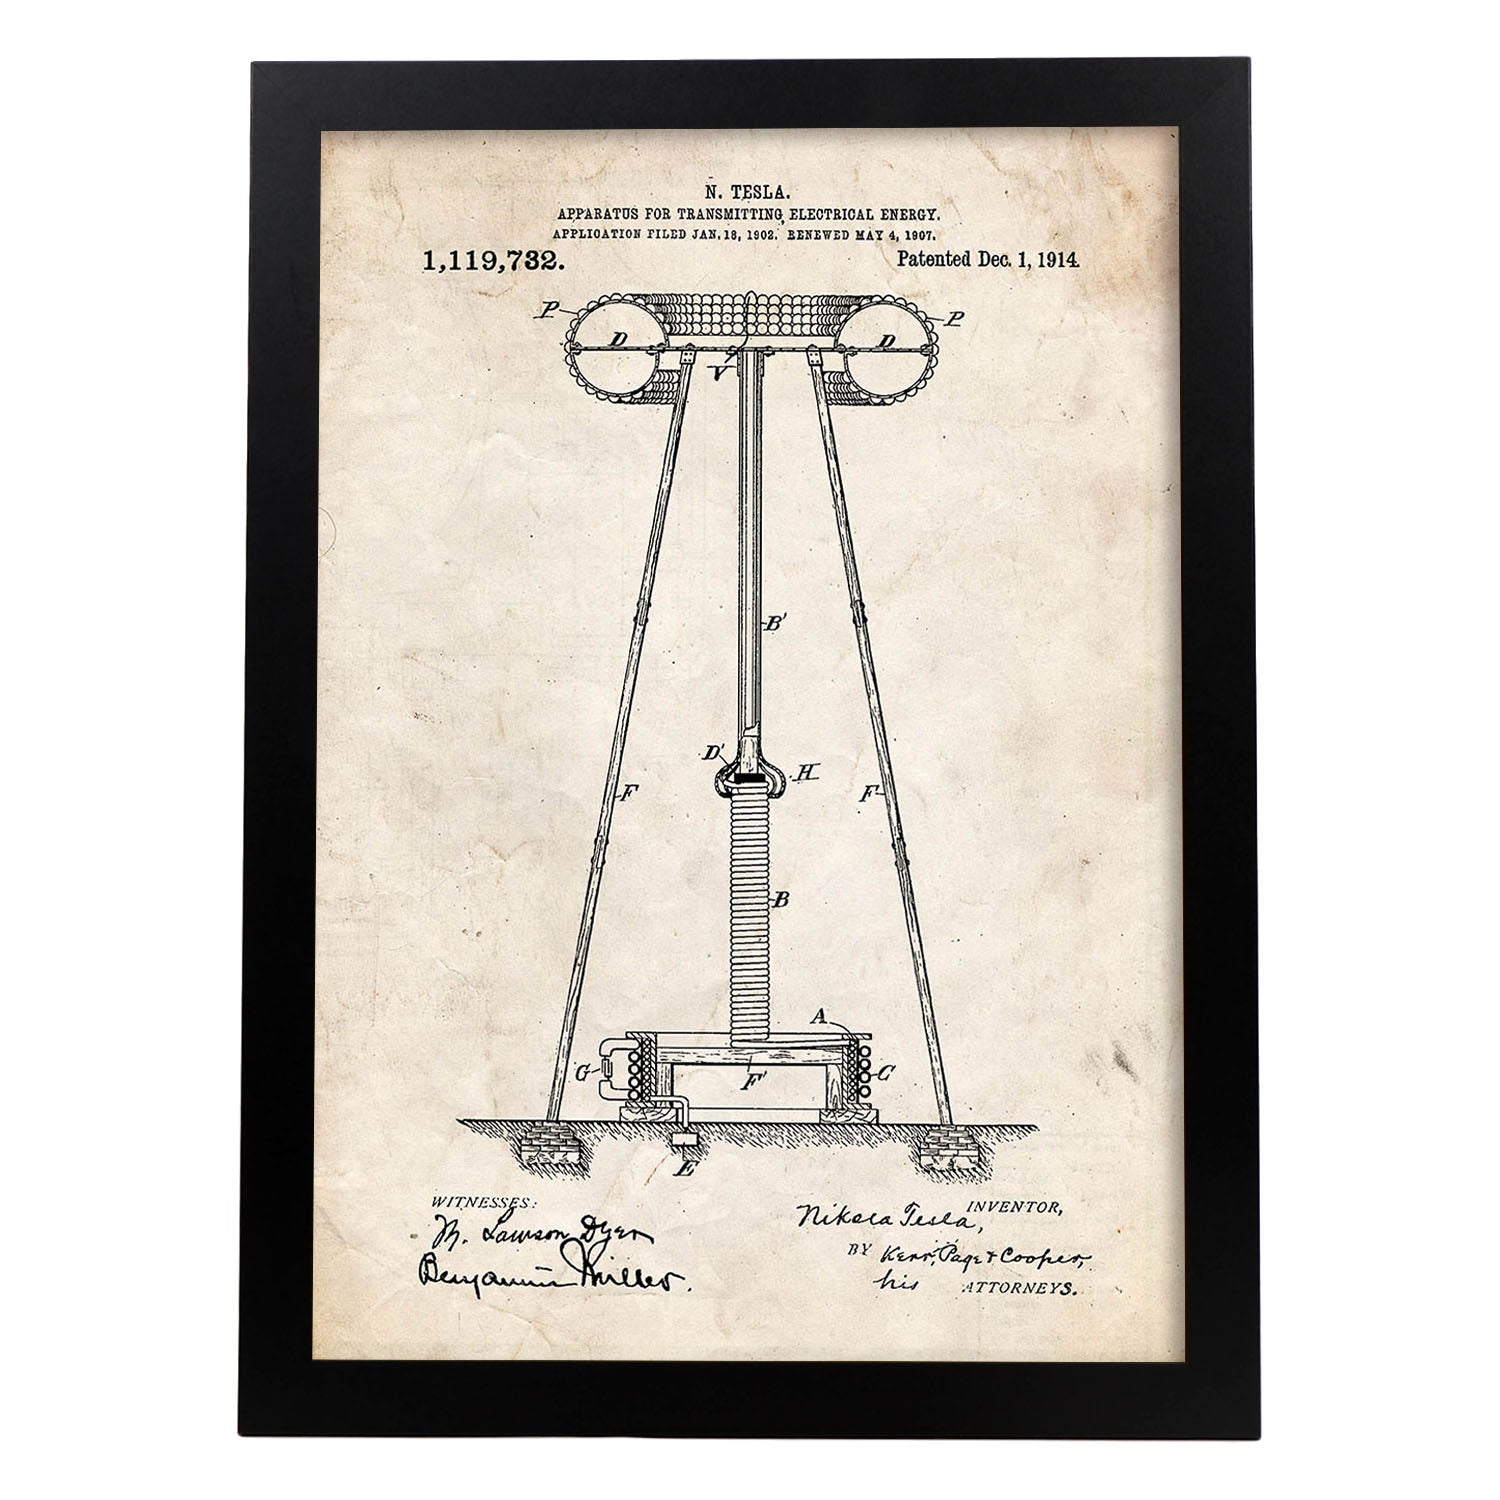 Poster con patente de Aparato de transmision de energia 2. Lámina con diseño de patente antigua.-Artwork-Nacnic-A3-Marco Negro-Nacnic Estudio SL